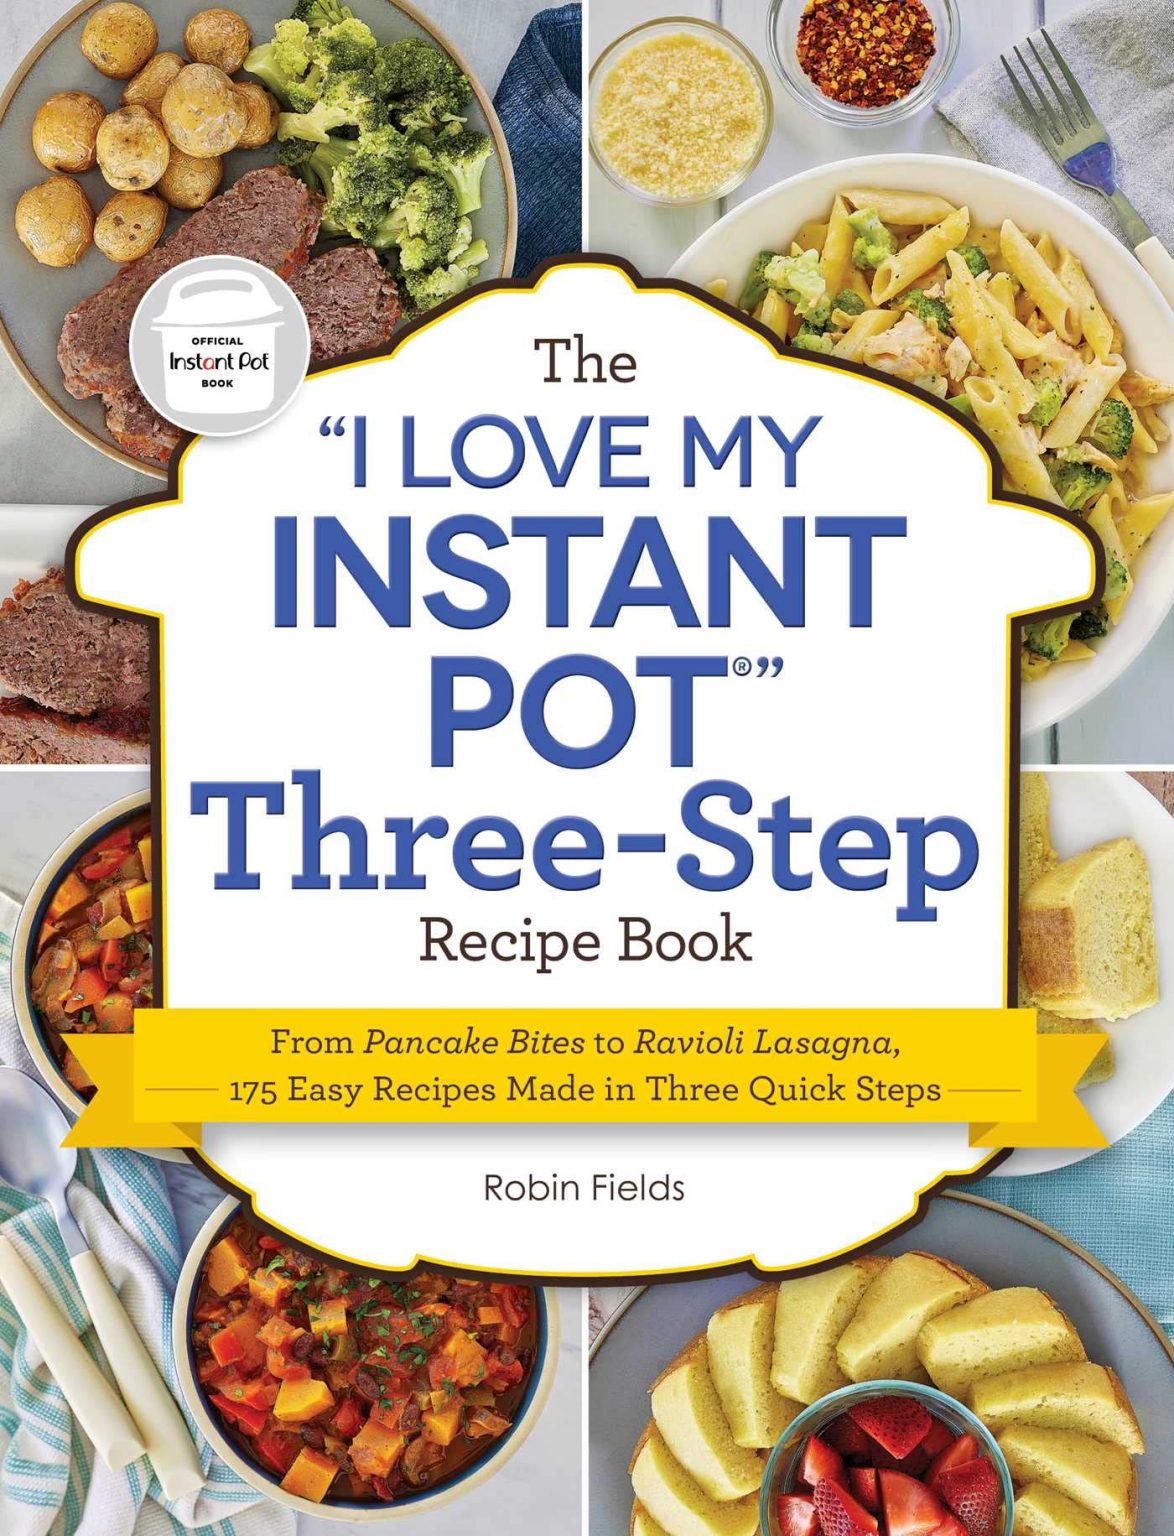 The “I Love My Instant Pot” Three-Step Recipe Book